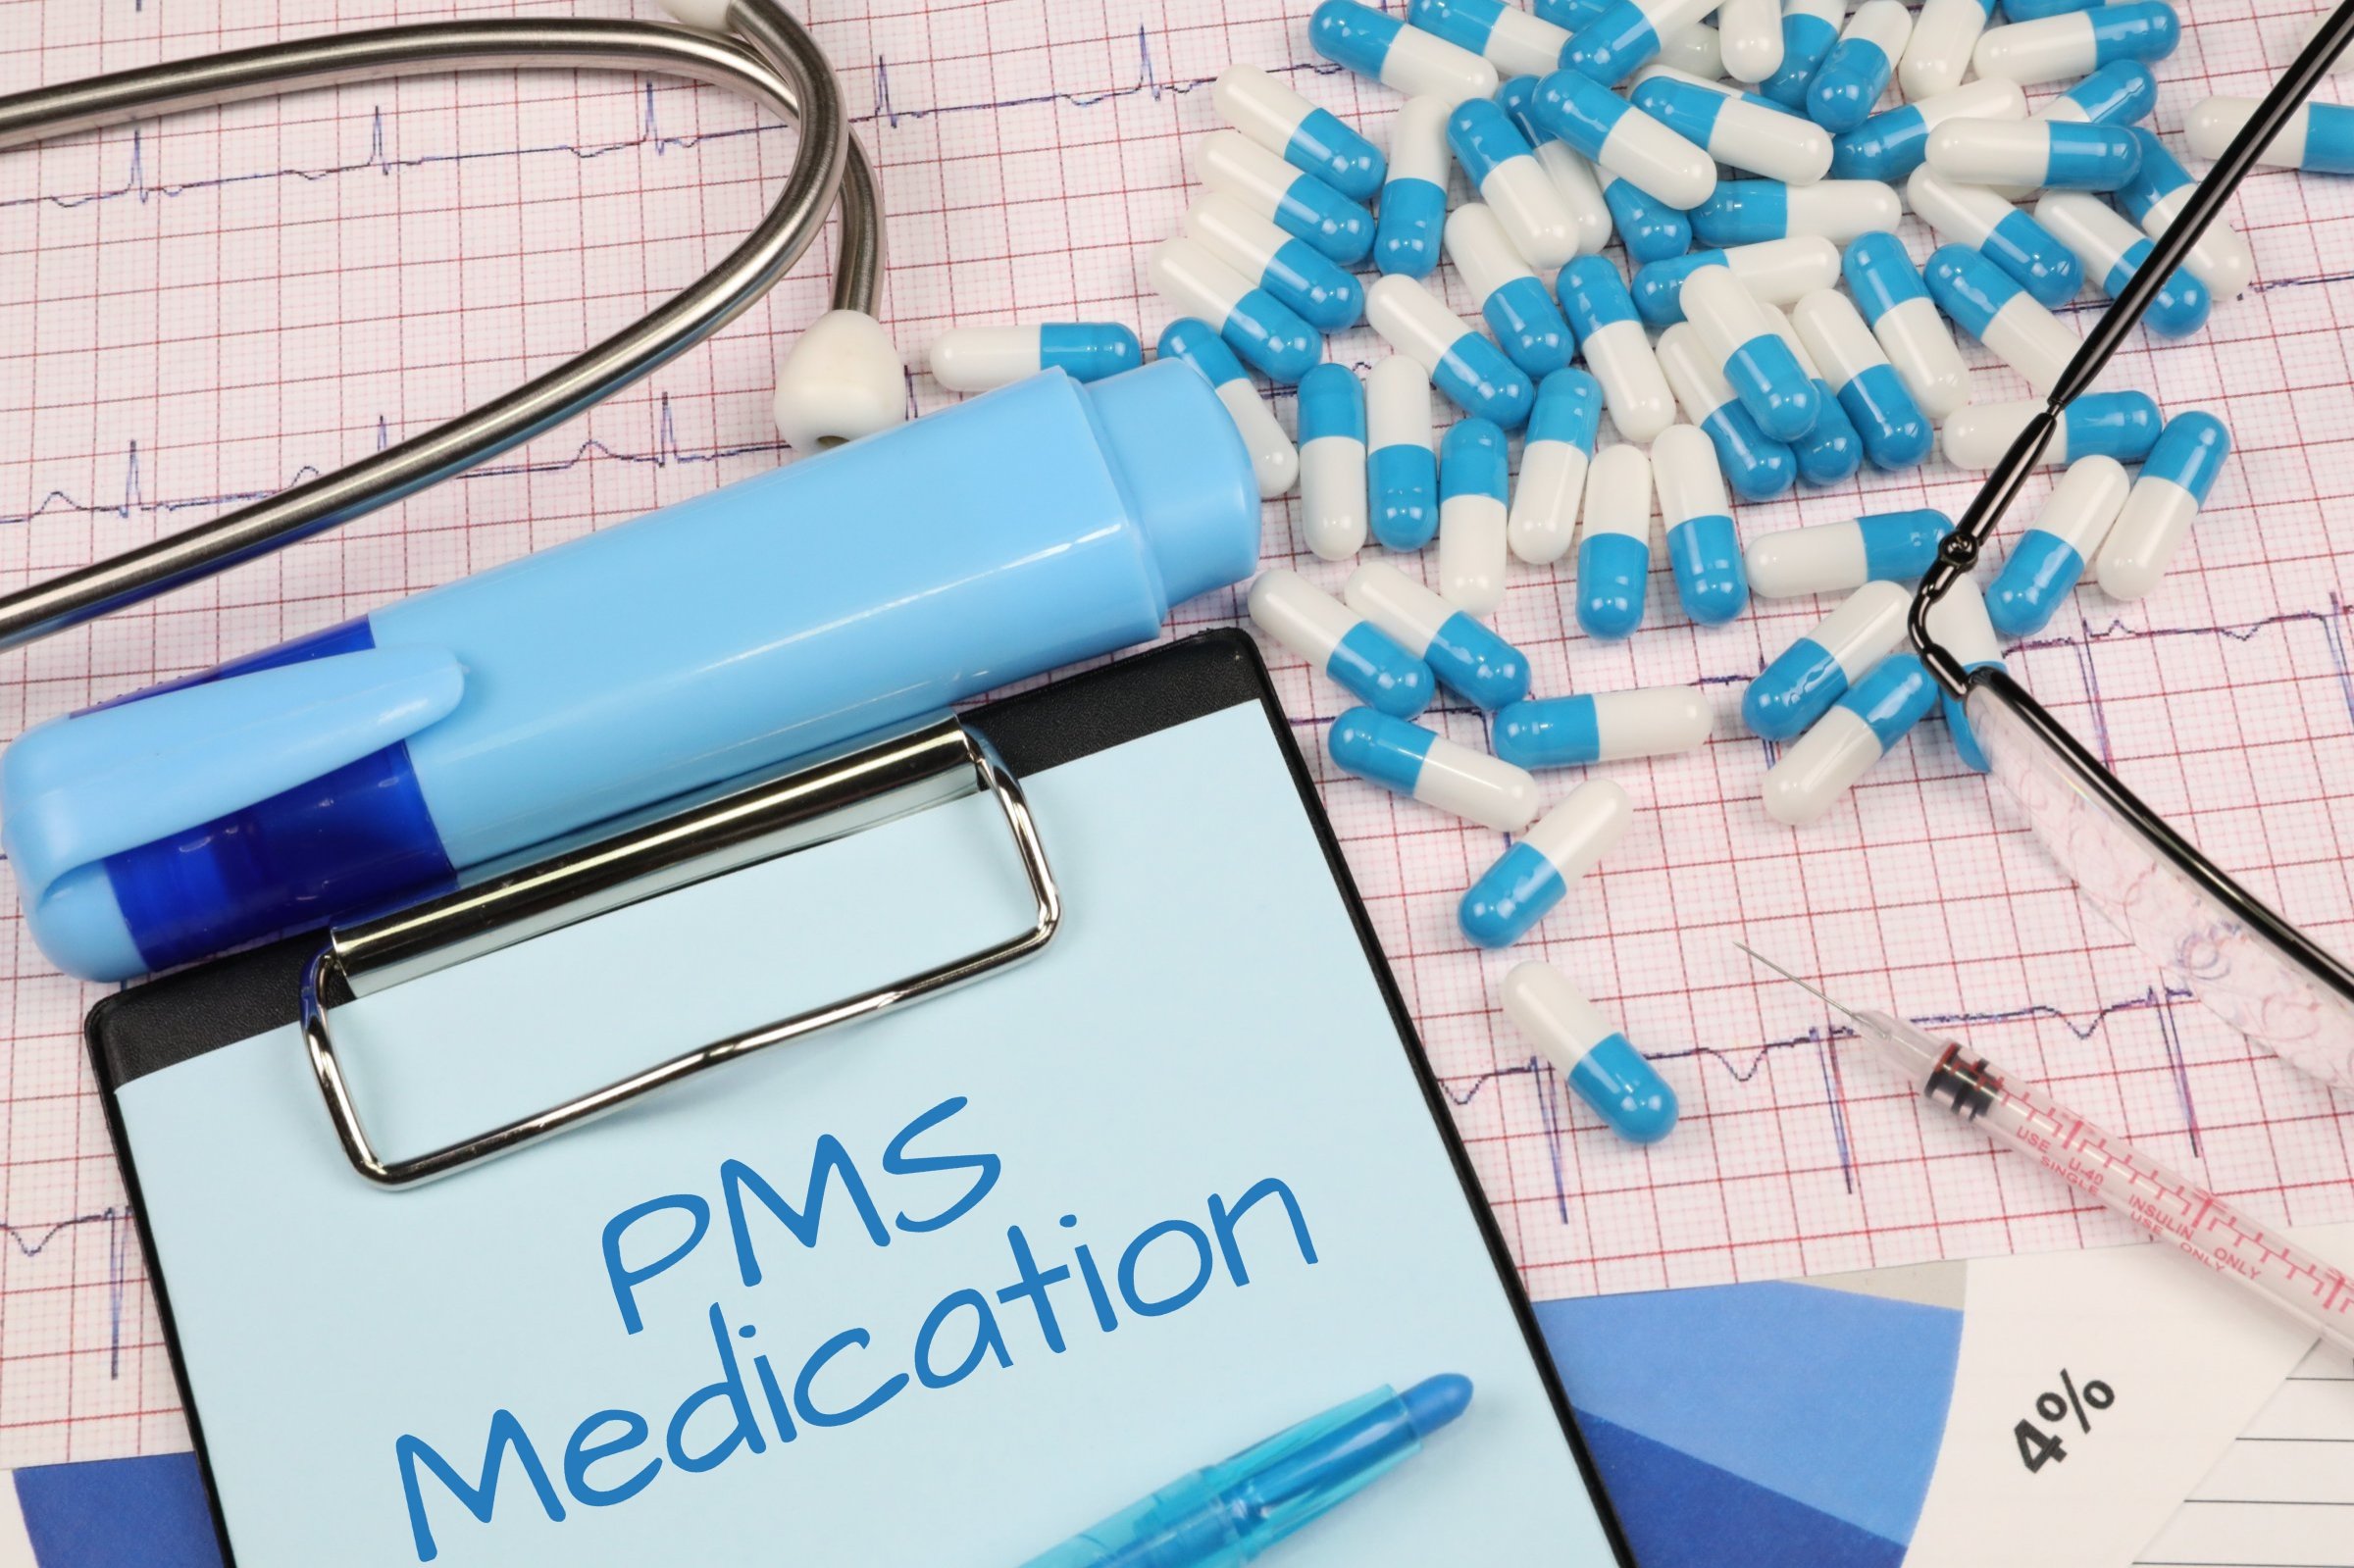 pms medication